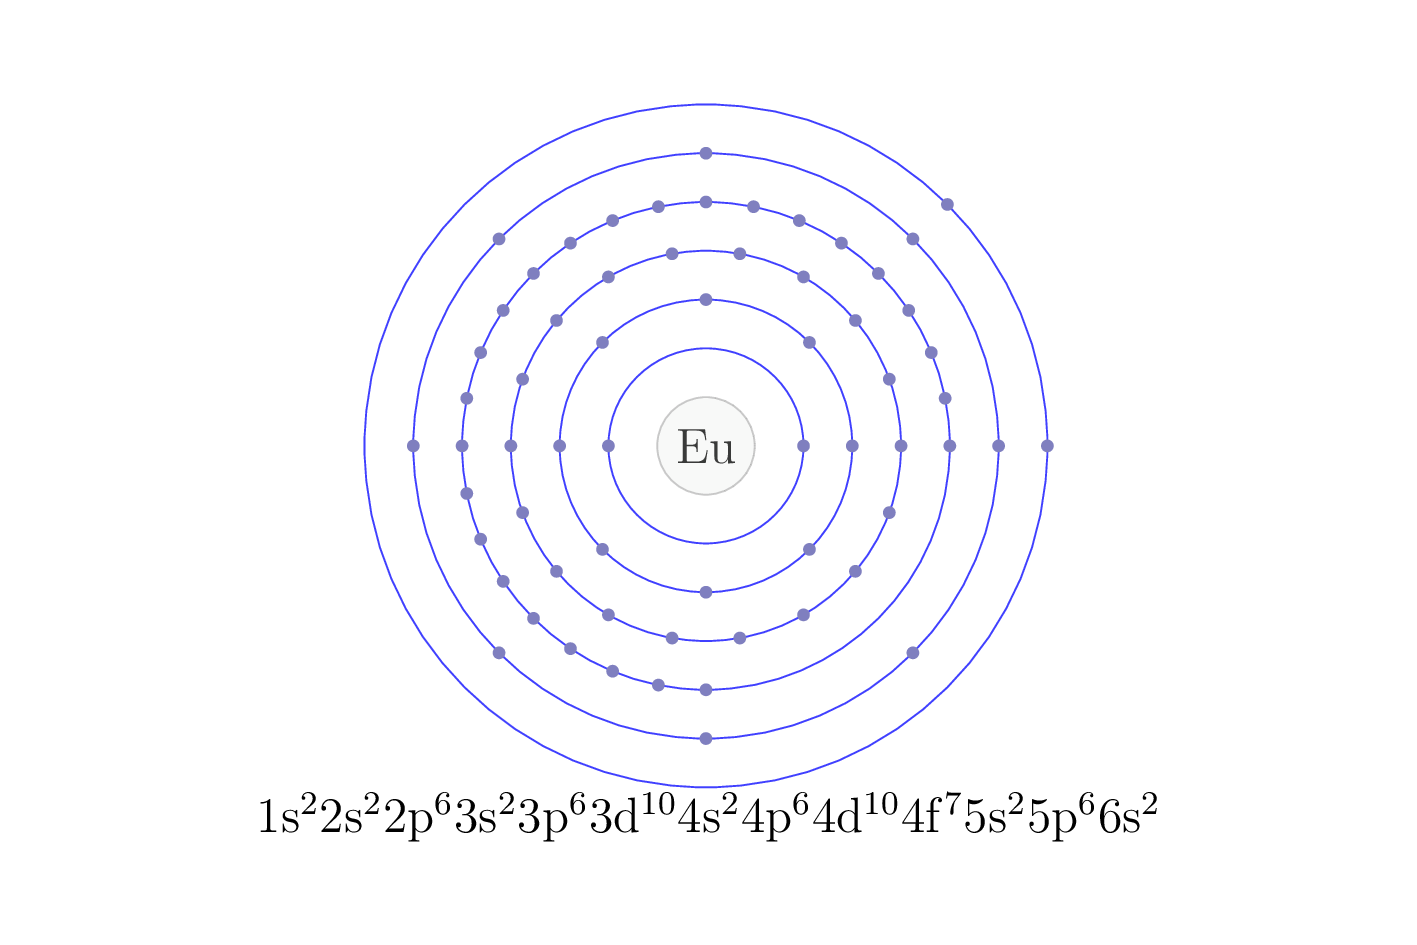 electron configuration of element Eu